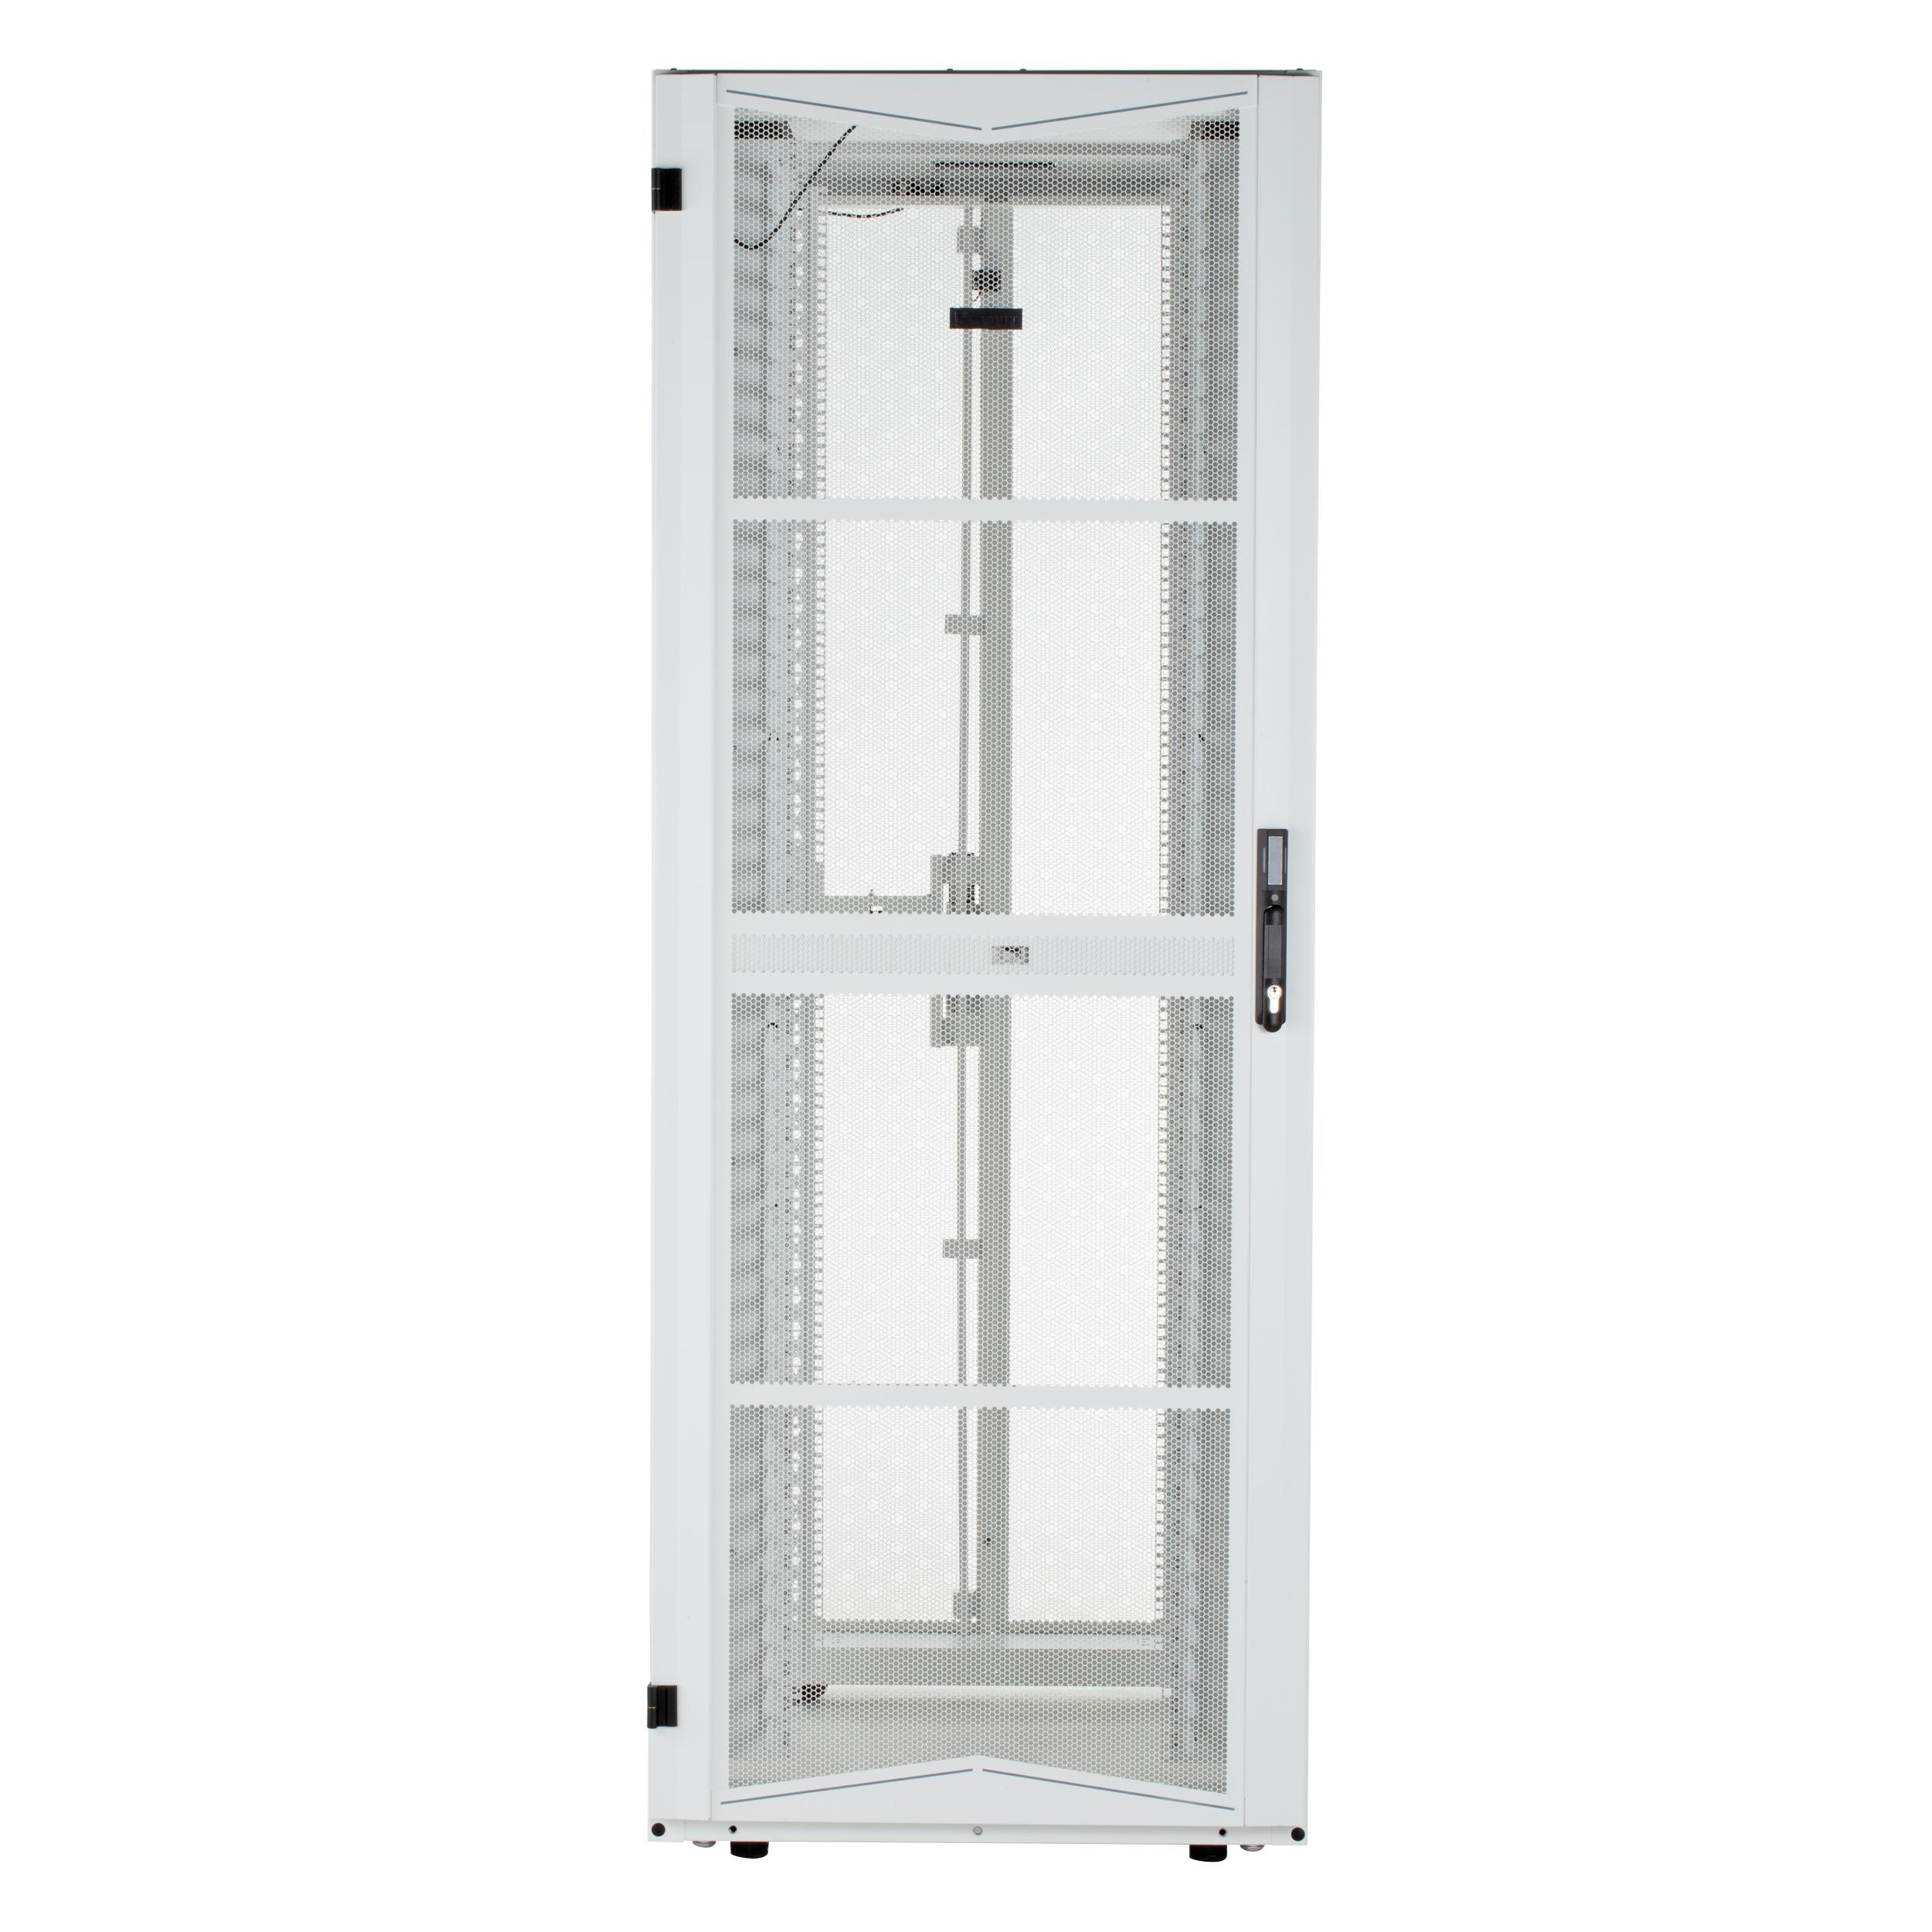 Panduit XG74512WS0001 FlexFusion Cabinet, 700mm x 45RU x 1070mm, White